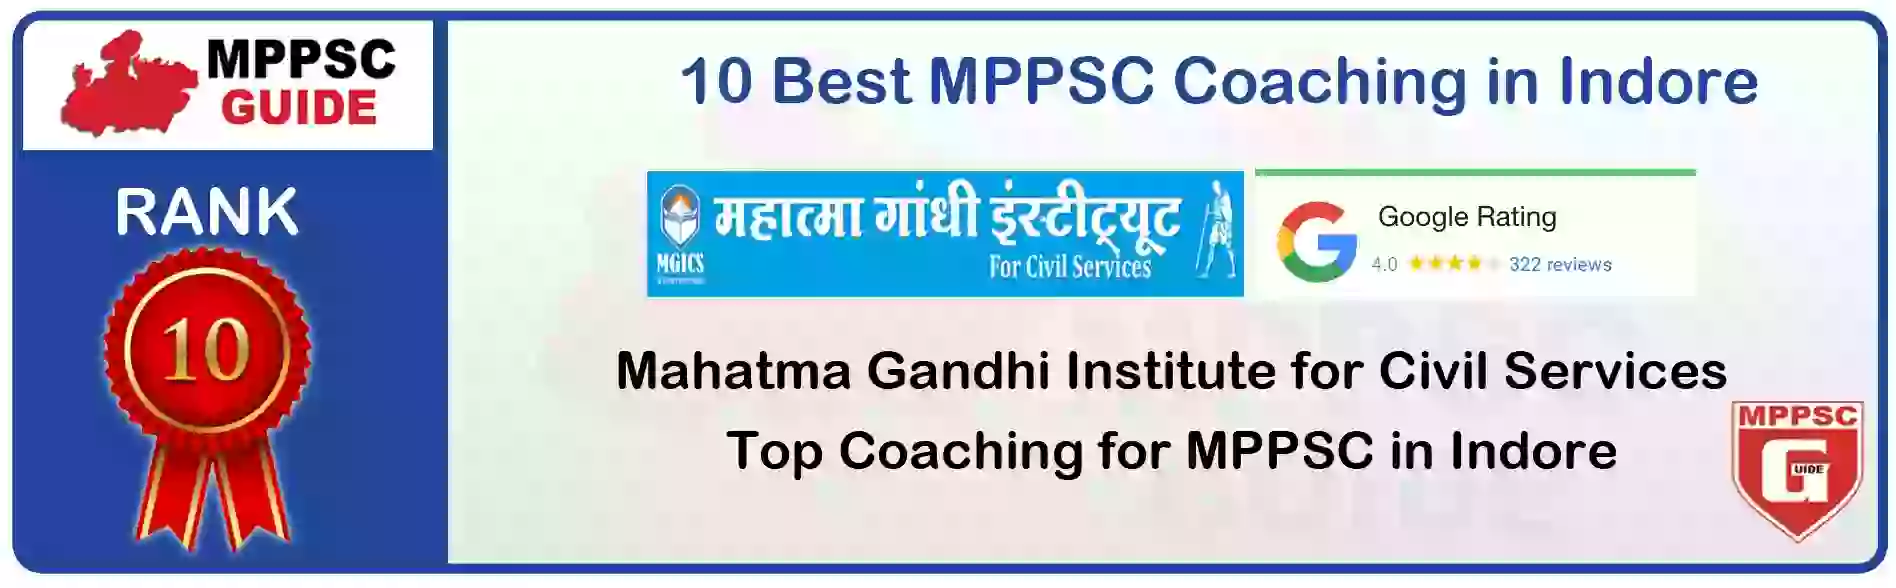 MPPSC Coaching in Khandwa, MPPSC Coaching Institute In Khandwa, Best MPPSC Coaching in Khandwa, Top 10 MPPSC Coaching In Khandwa, best mppsc coaching institute in khandwa, MPPSC Coaching Classes In Khandwa, MPPSC Online Coaching In Khandwa, mppsc coaching in Khandwa bhanwarkua